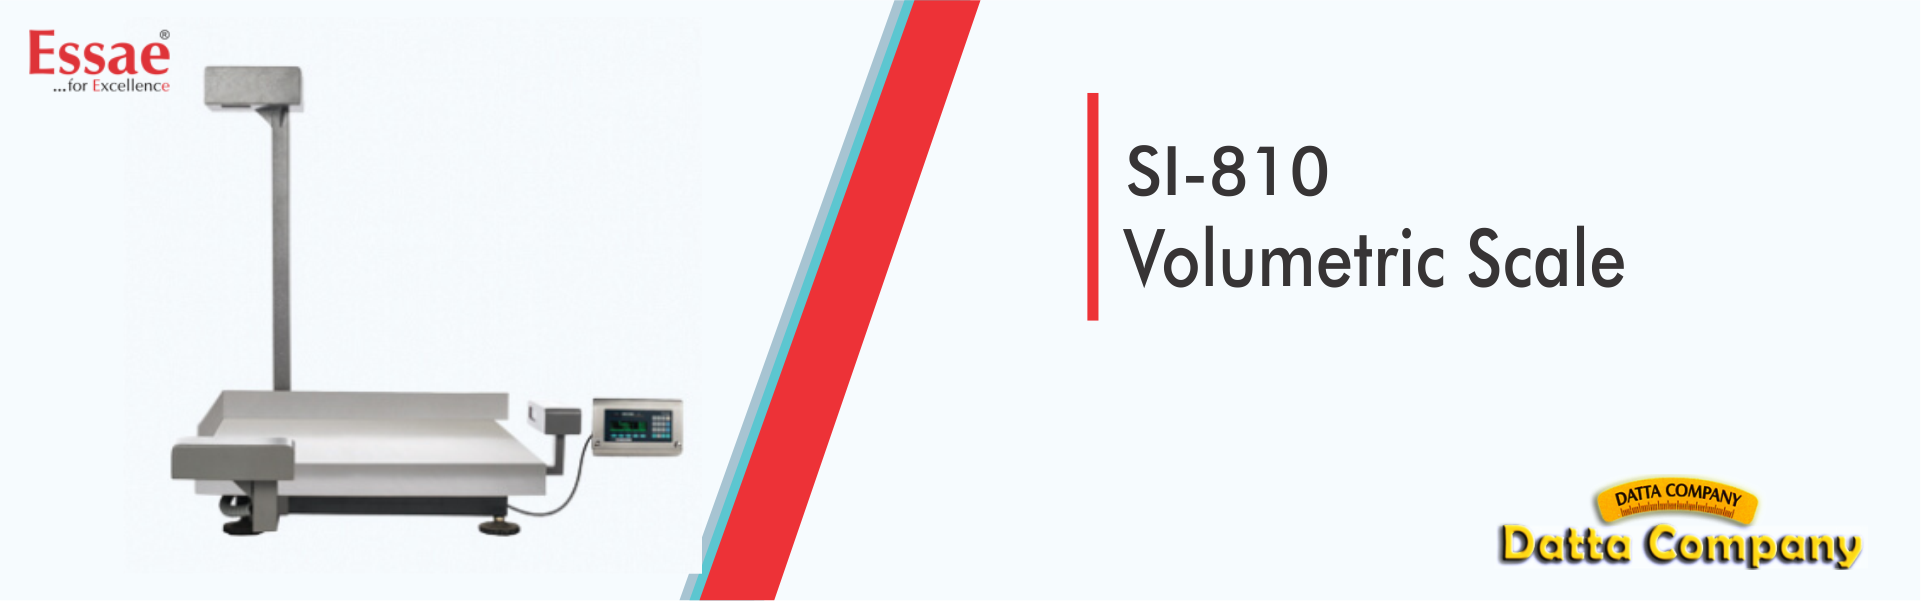 SI-810 Volumetric Scale